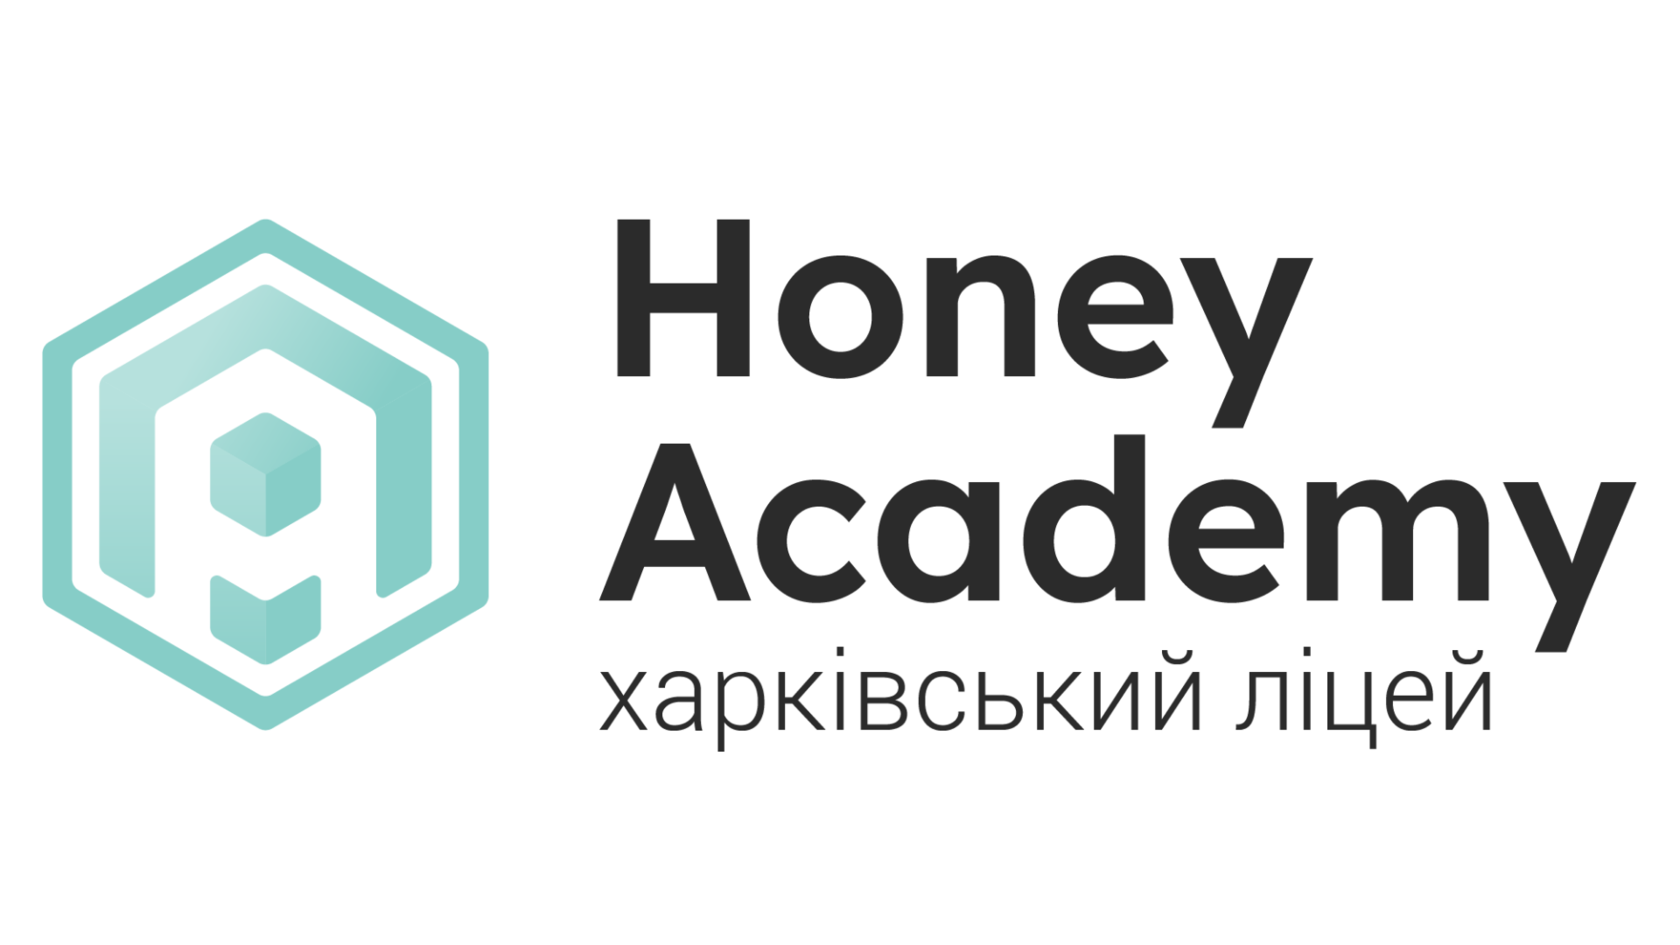 HoneyAcademy